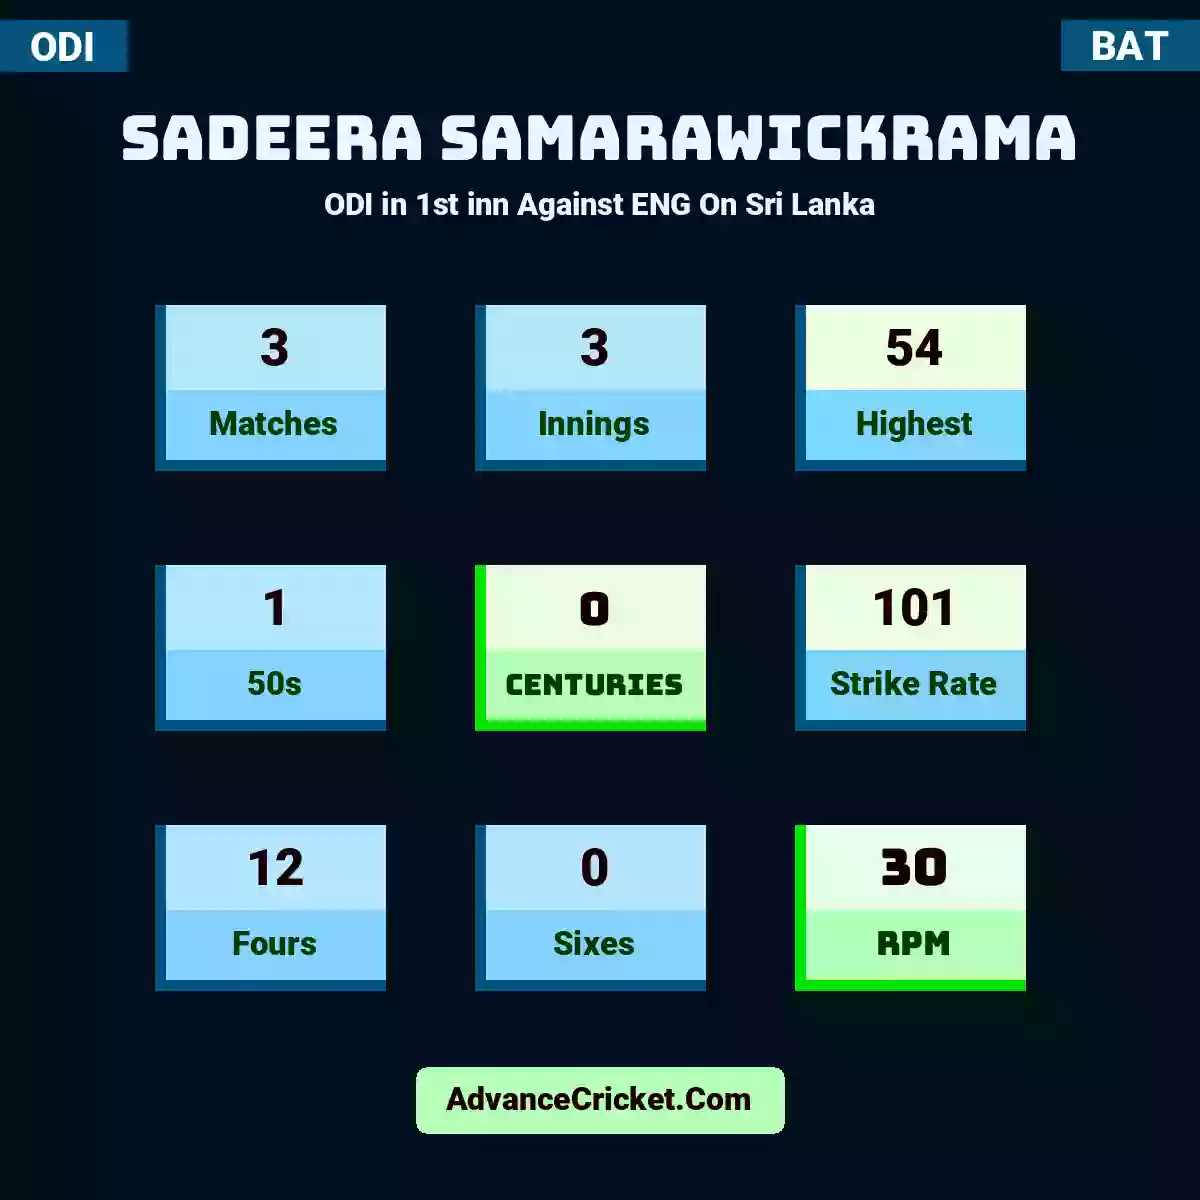 Sadeera Samarawickrama ODI  in 1st inn Against ENG On Sri Lanka, Sadeera Samarawickrama played 3 matches, scored 54 runs as highest, 1 half-centuries, and 0 centuries, with a strike rate of 101. S.Samarawickrama hit 12 fours and 0 sixes, with an RPM of 30.